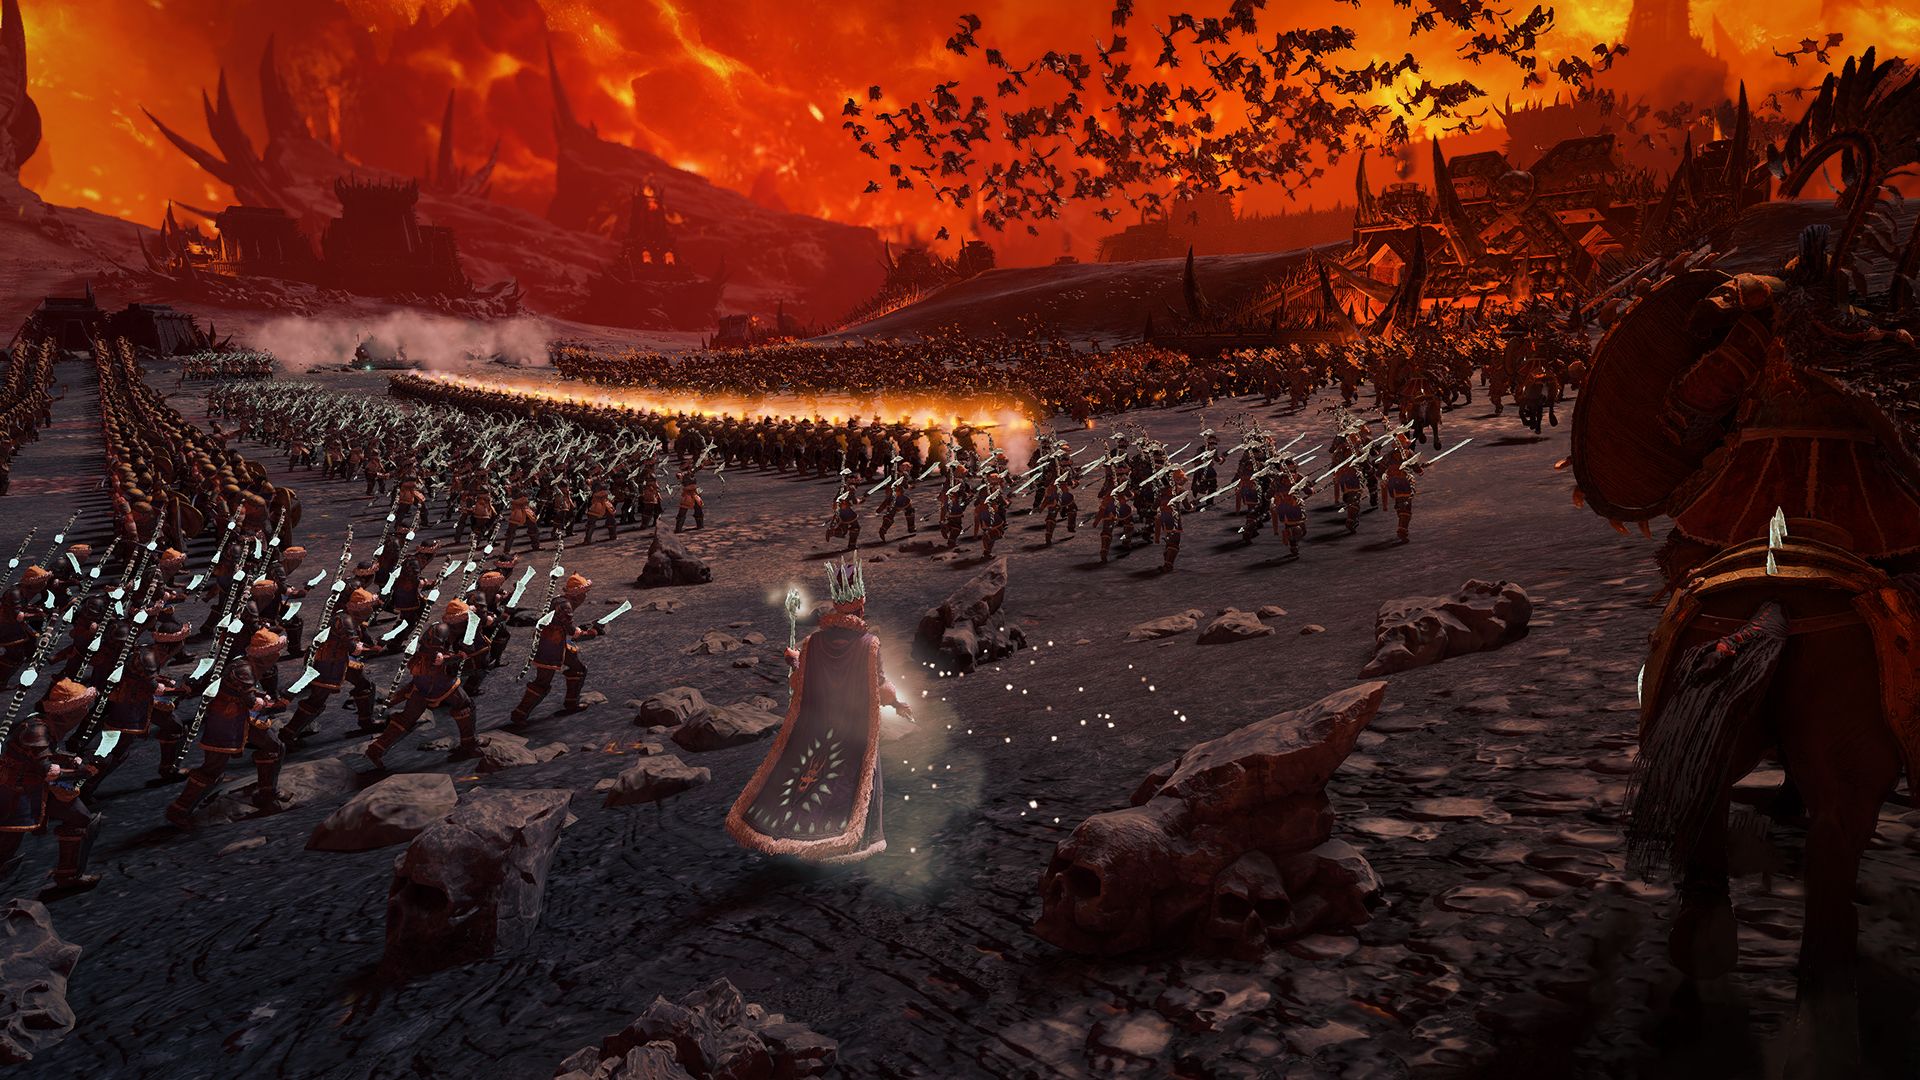 Total War Warhammer III arriva su Apple Silicon ma non Intel